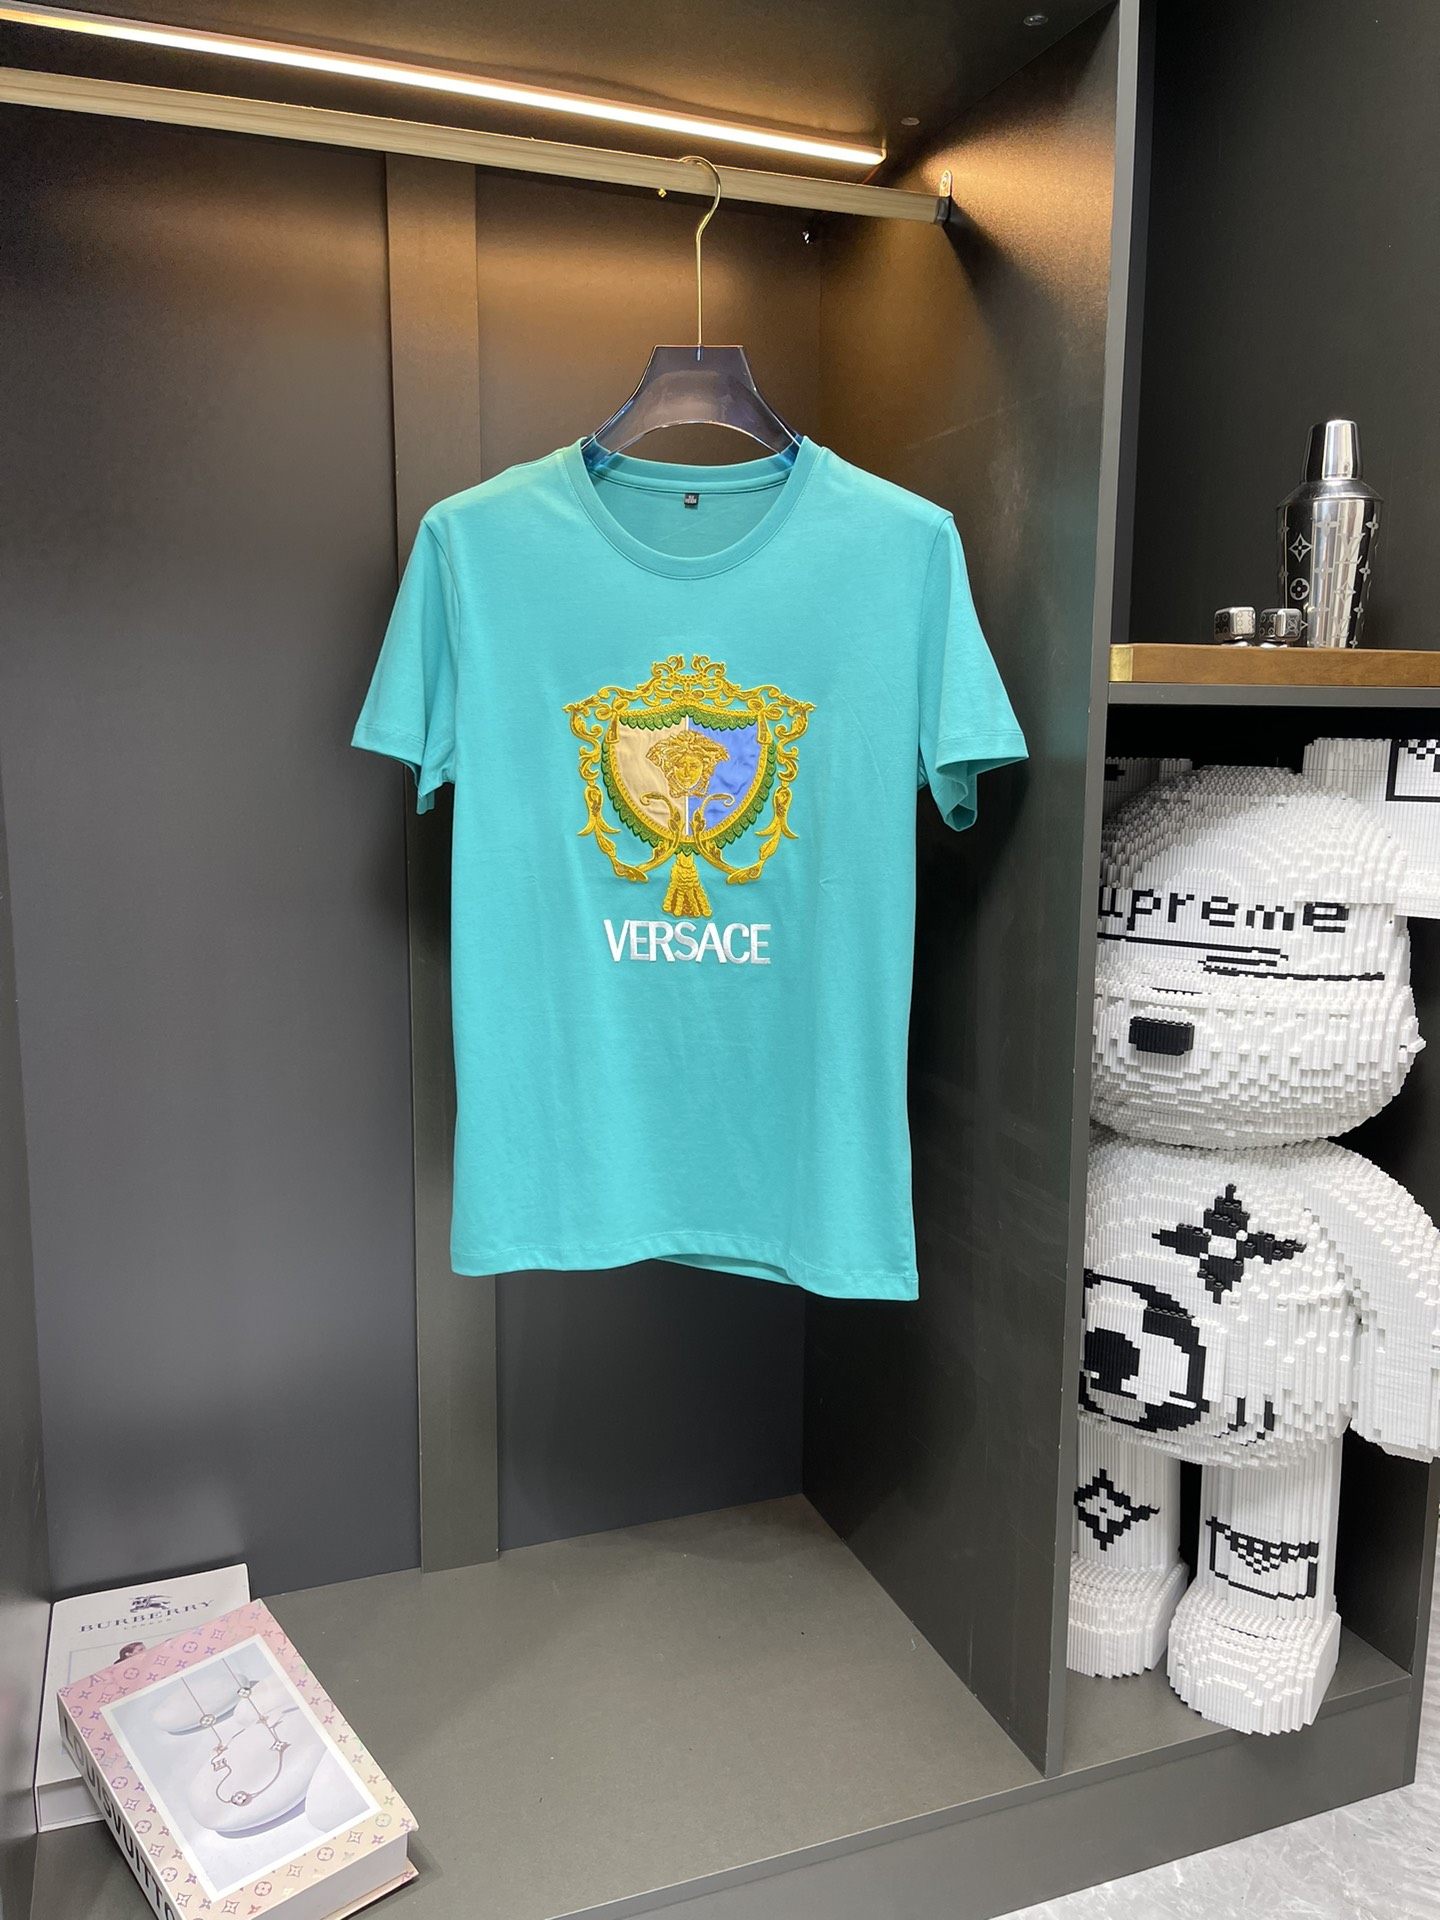 Versace Clothing T-Shirt Unisex Cotton Mercerized Spring/Summer Collection Fashion Short Sleeve